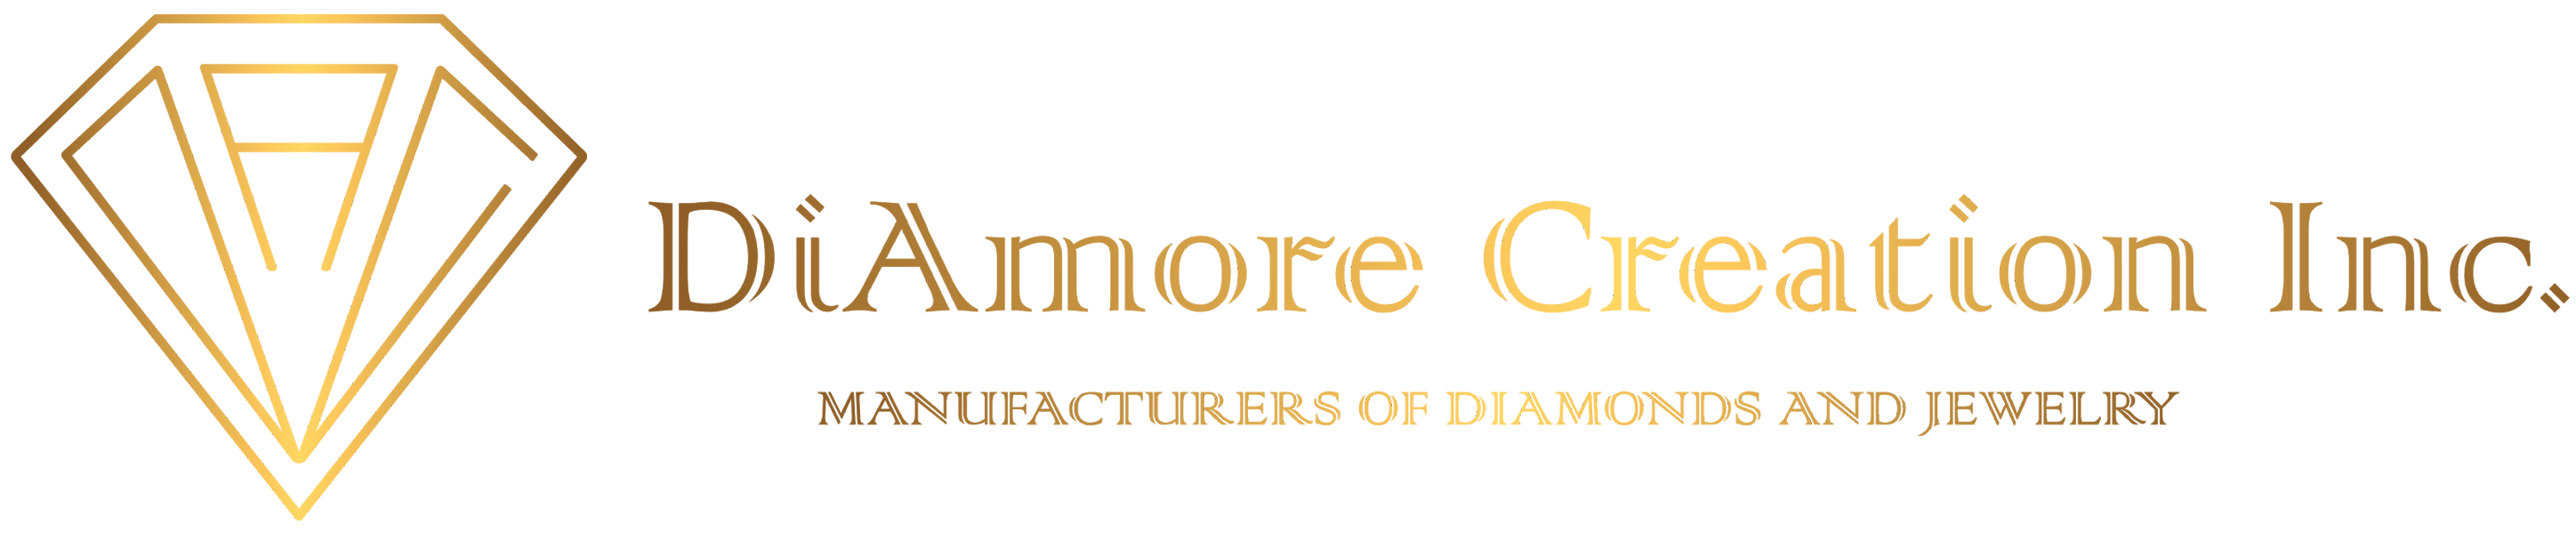  DiAmore Creation